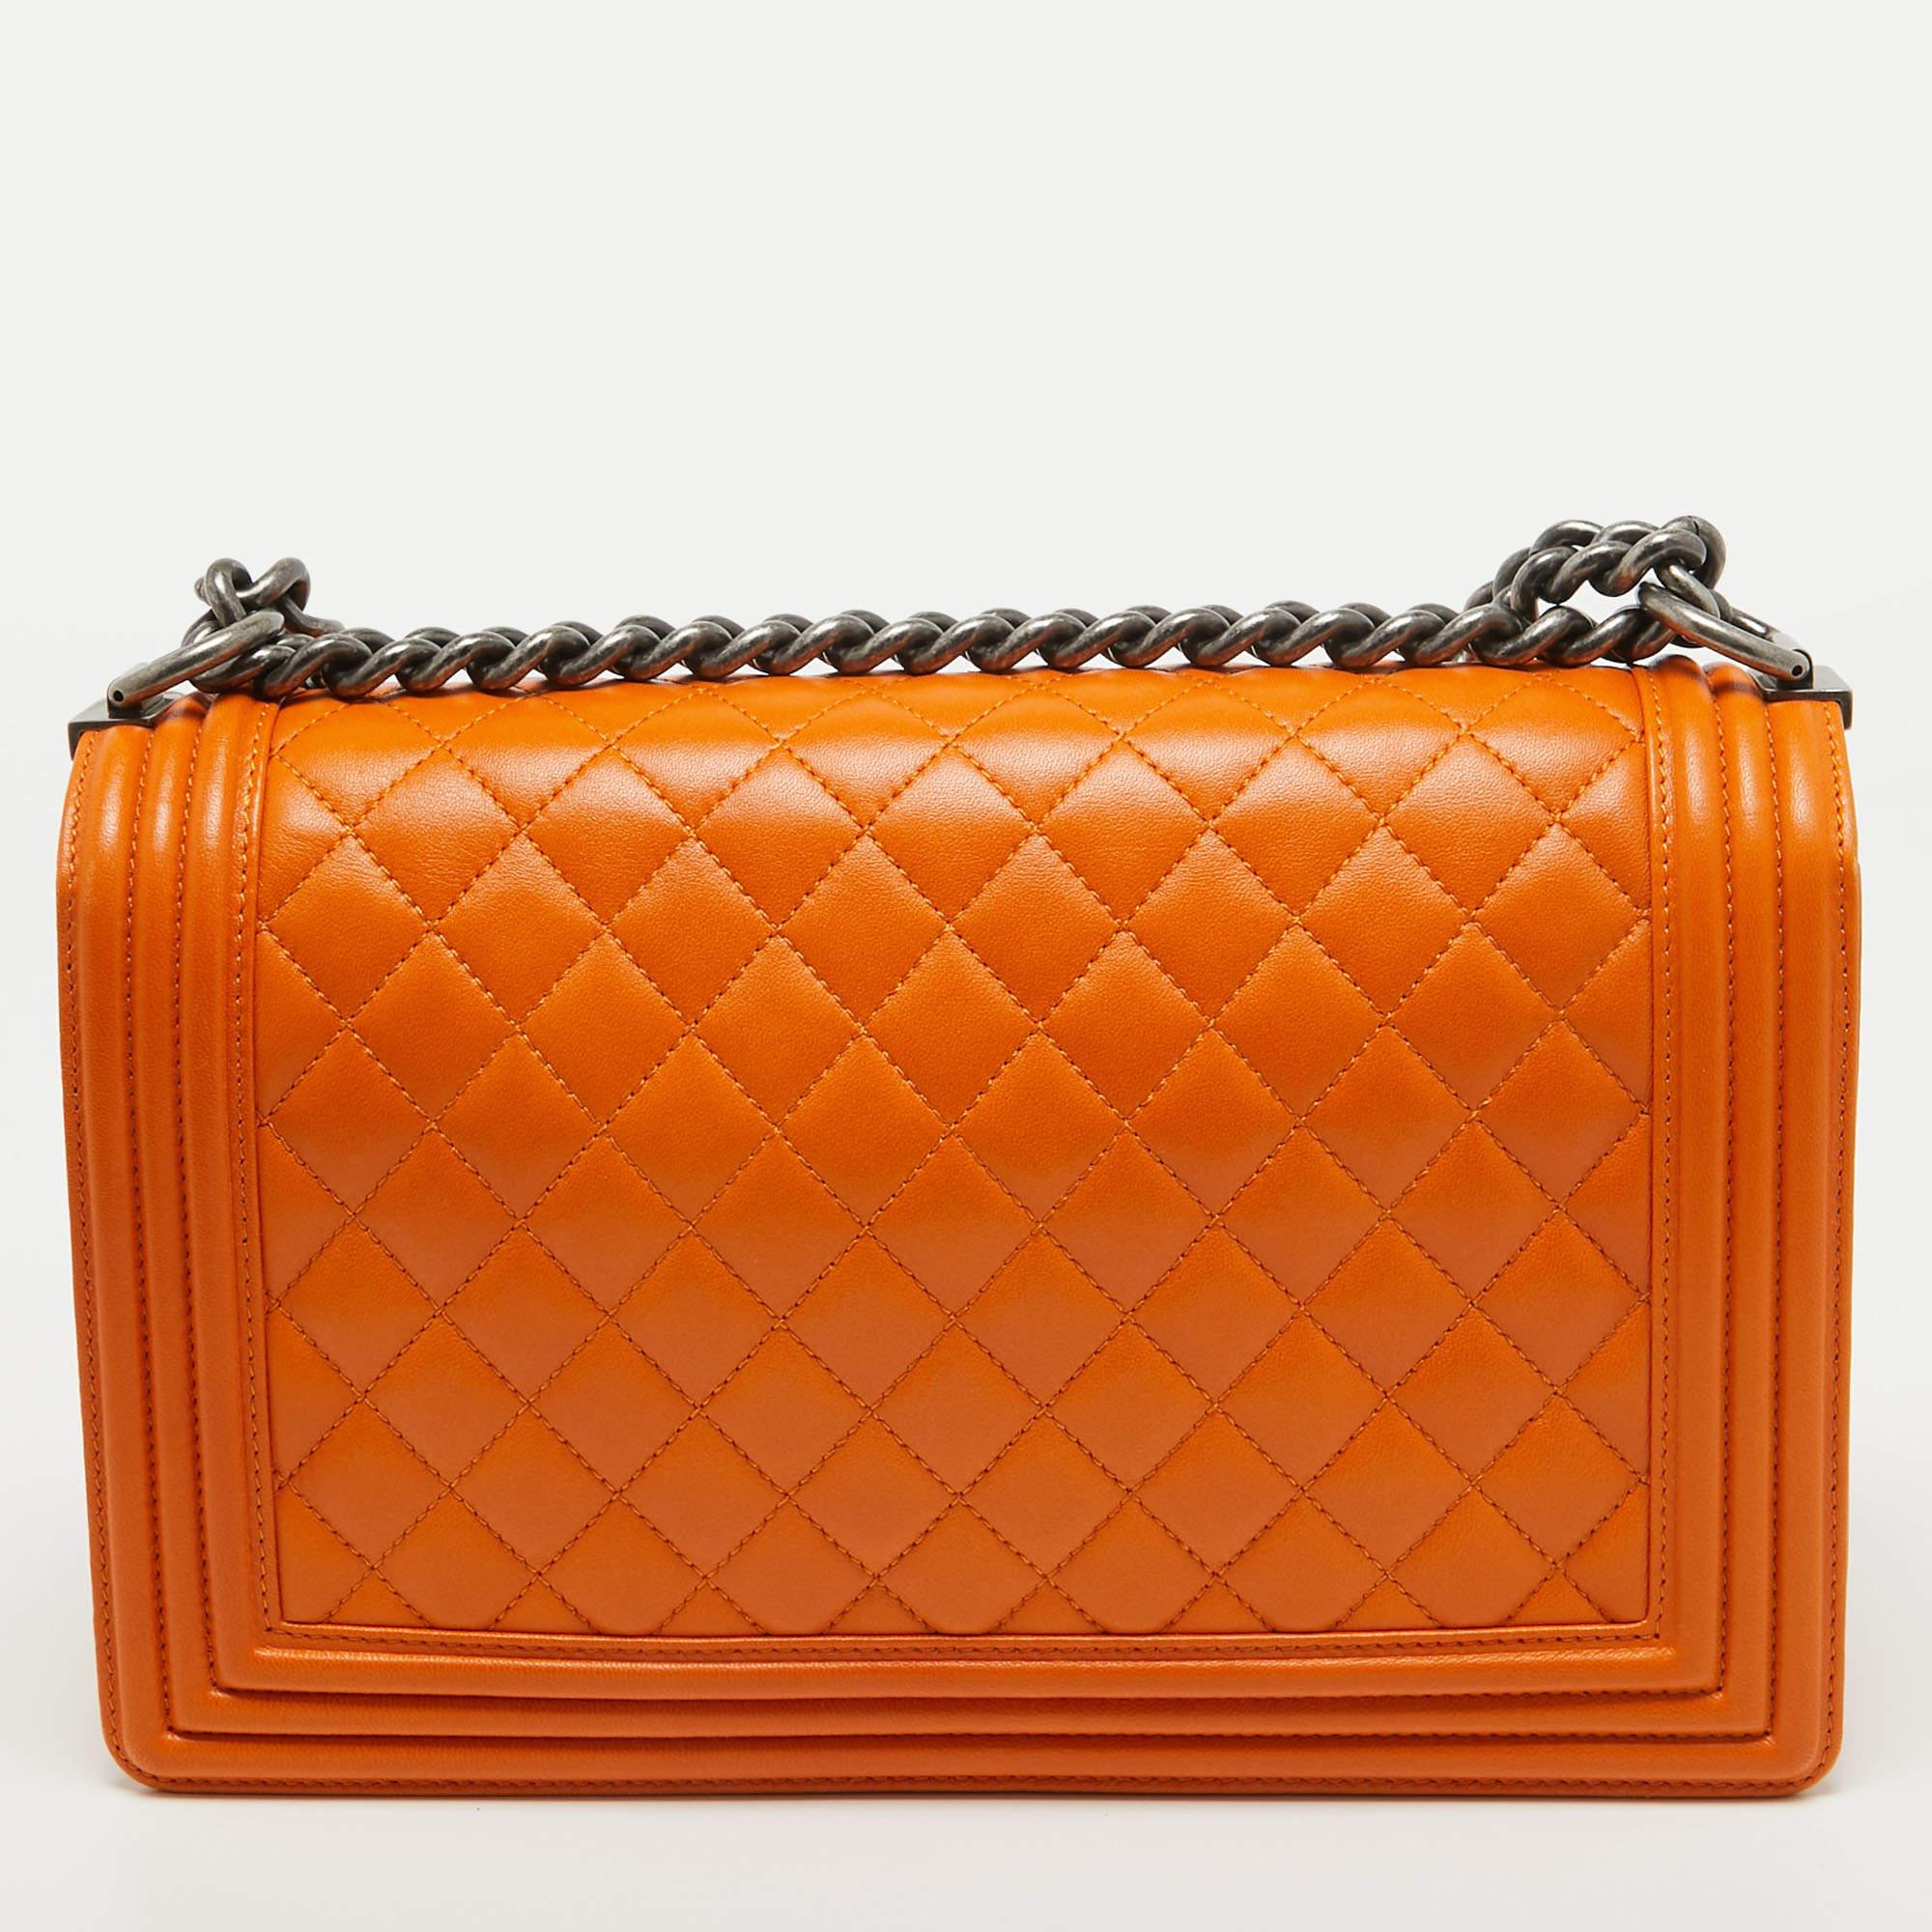 Chanel Orange Quilted Leather New Medium Boy Bag 3